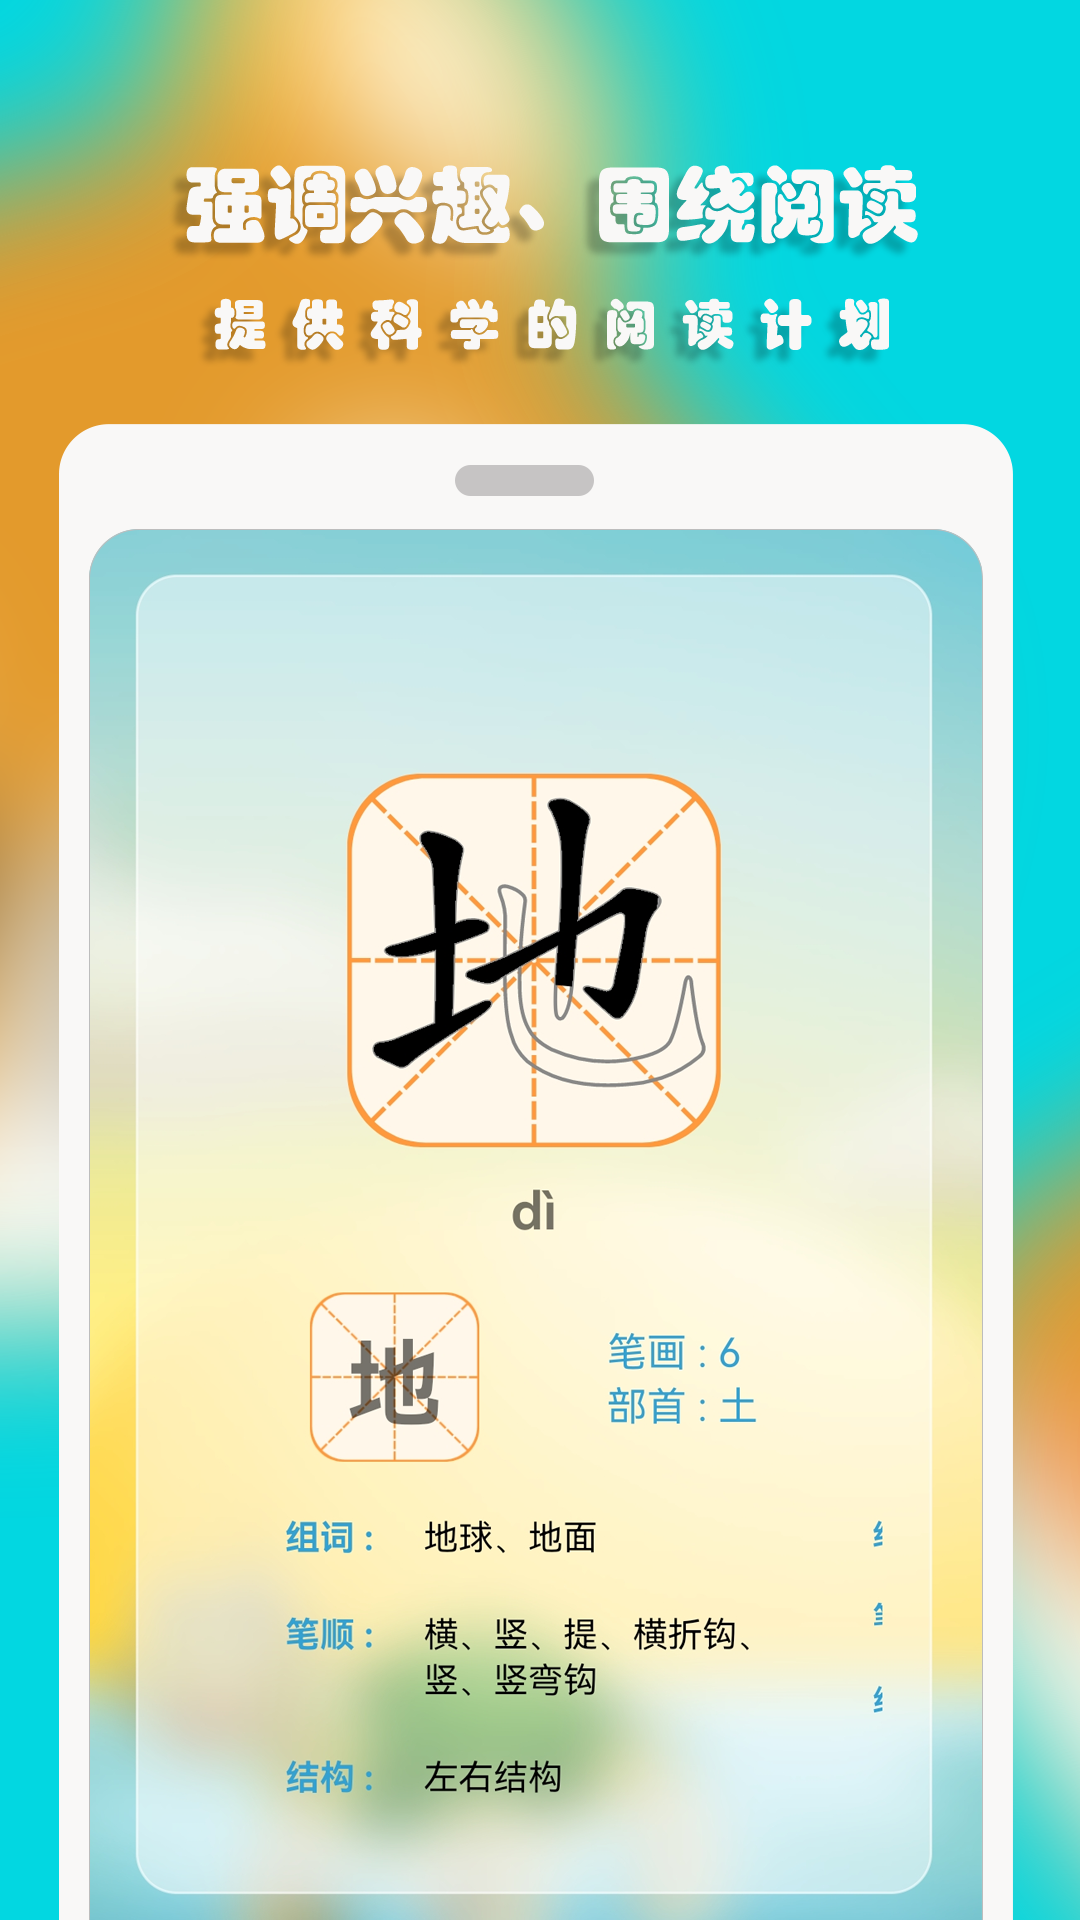 汪汪识字app下载,汪汪识字app官方版 v3.1